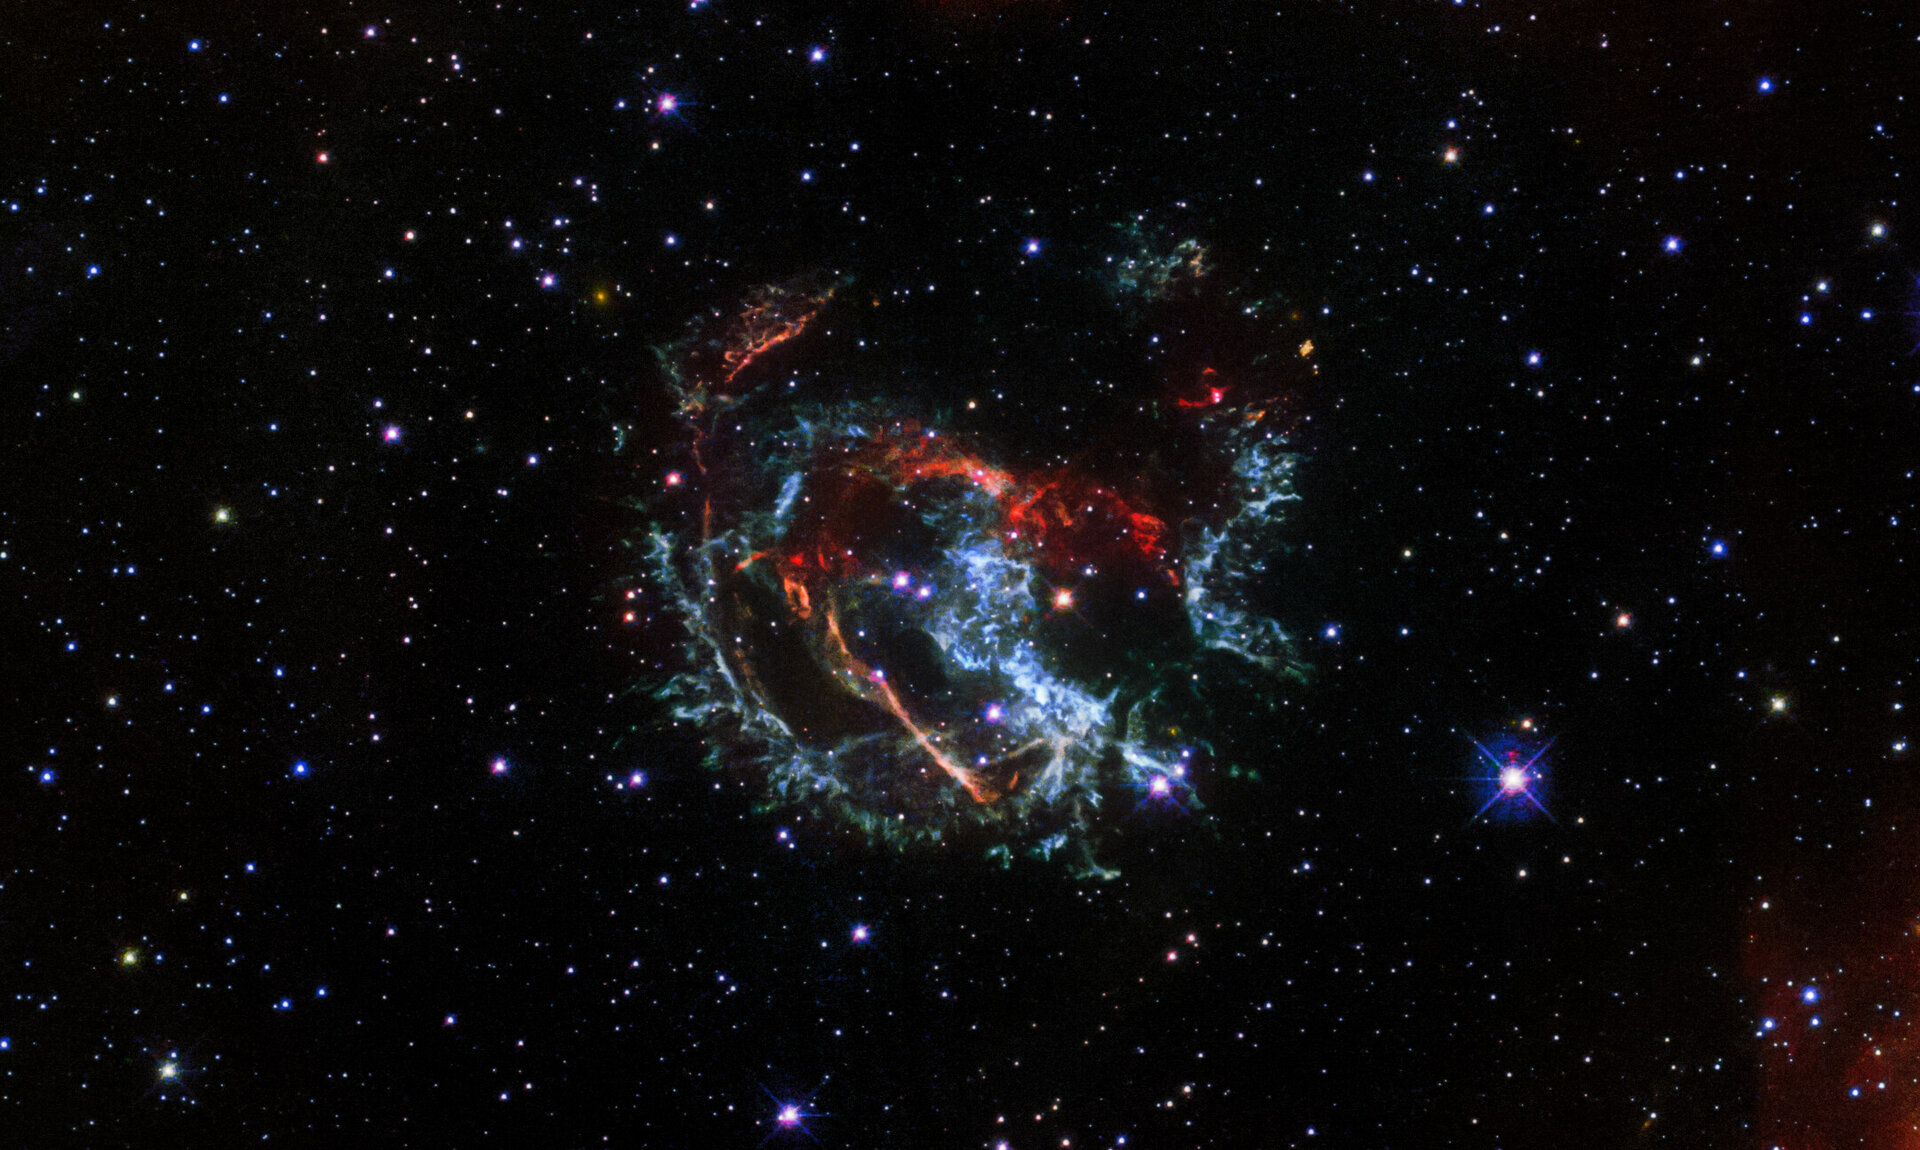 https://www.esa.int/var/esa/storage/images/esa_multimedia/images/2021/01/hubble_pinpoints_supernova_blast/22417706-1-eng-GB/Hubble_pinpoints_supernova_blast_pillars.jpg